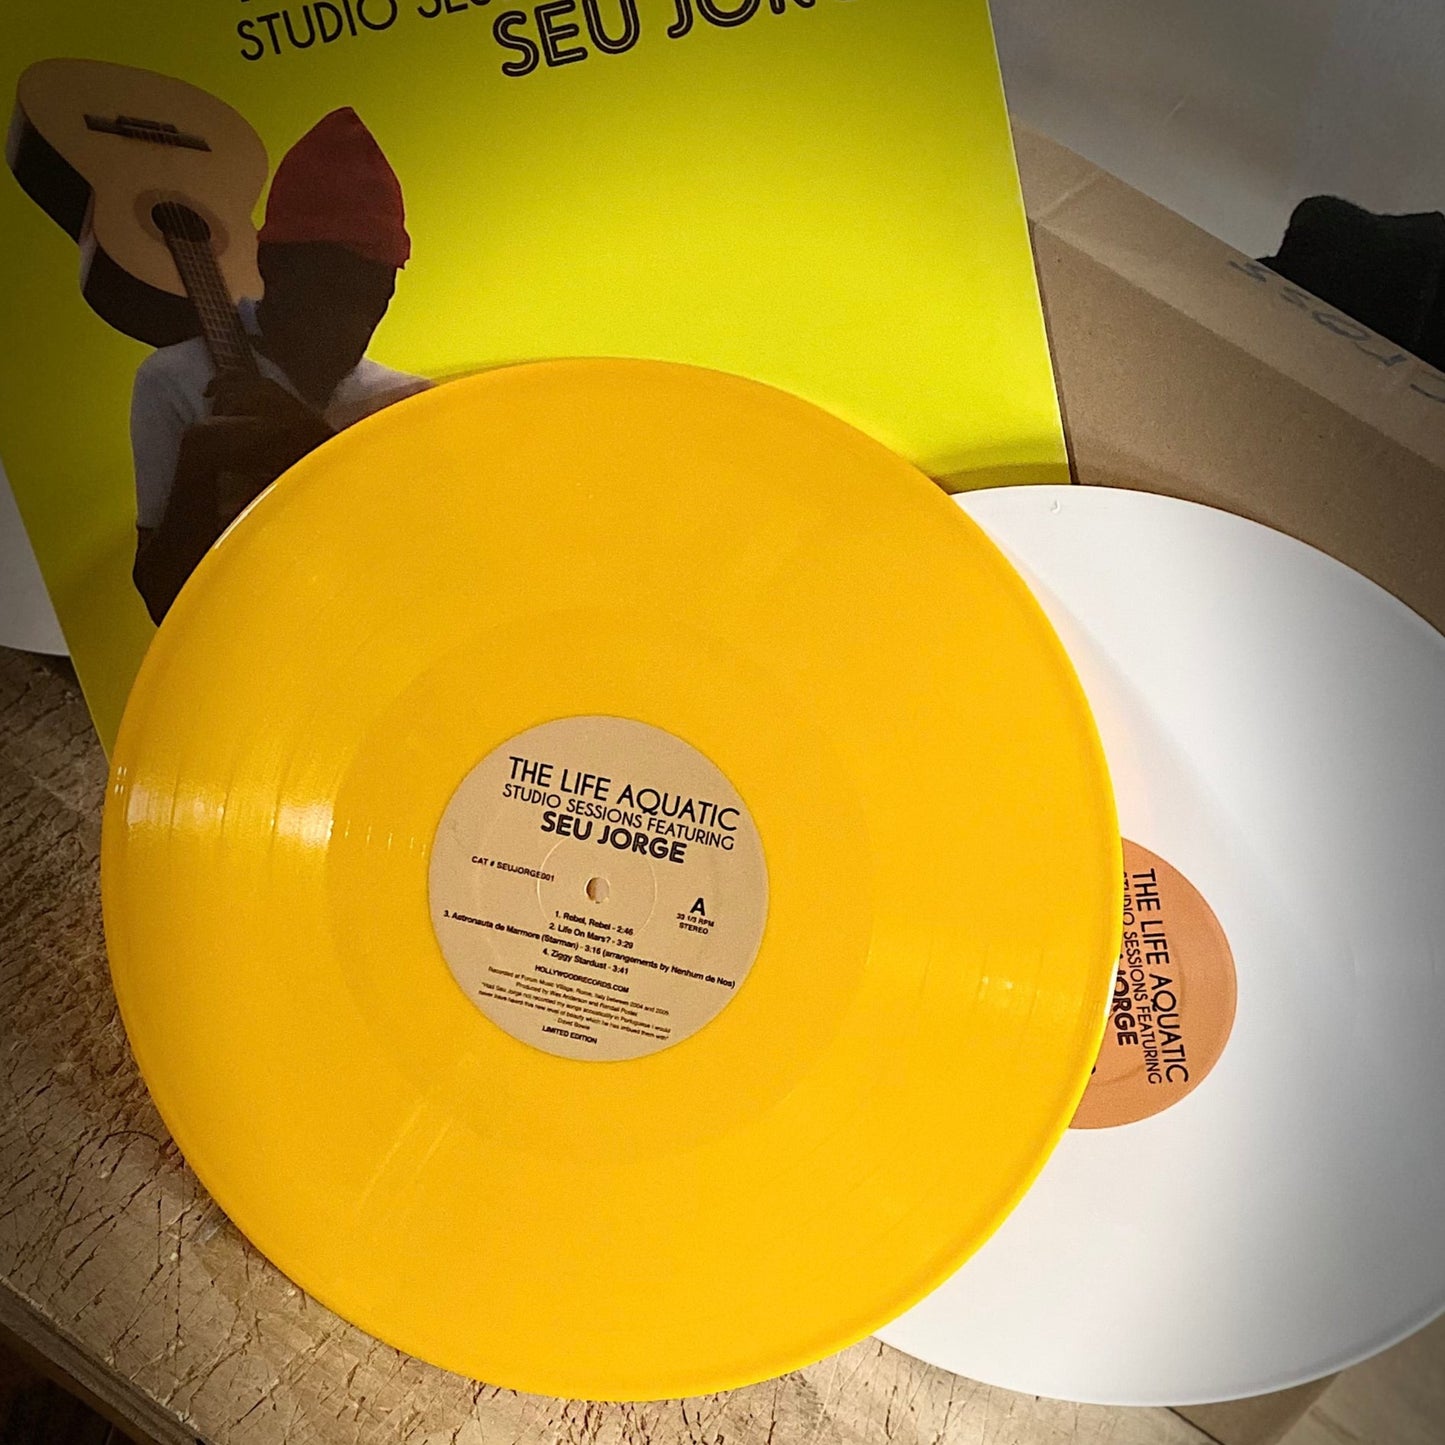 SEU JORGE – The Life Aquatic Studio Sessions 2xLP (yellow + white vinyl)